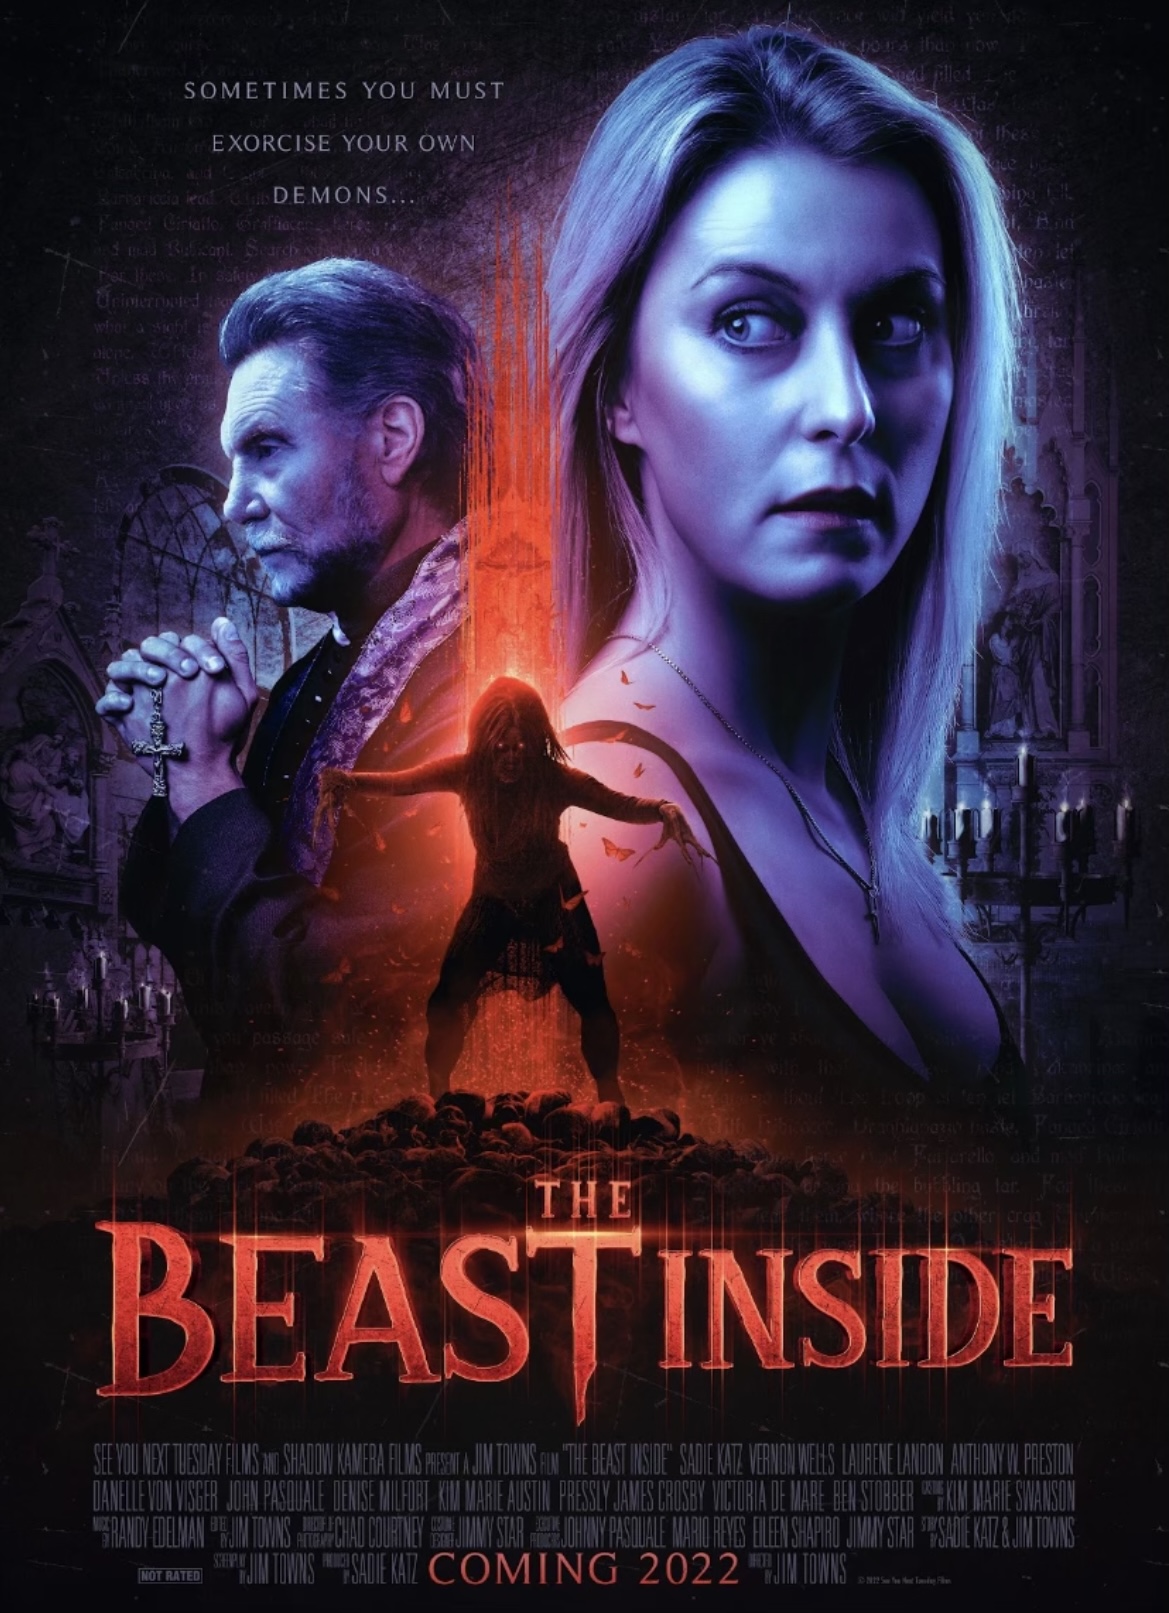 World Renowned Film Composer Randy Edelman Set to Score New Horror Thriller “The Beast Inside” 1